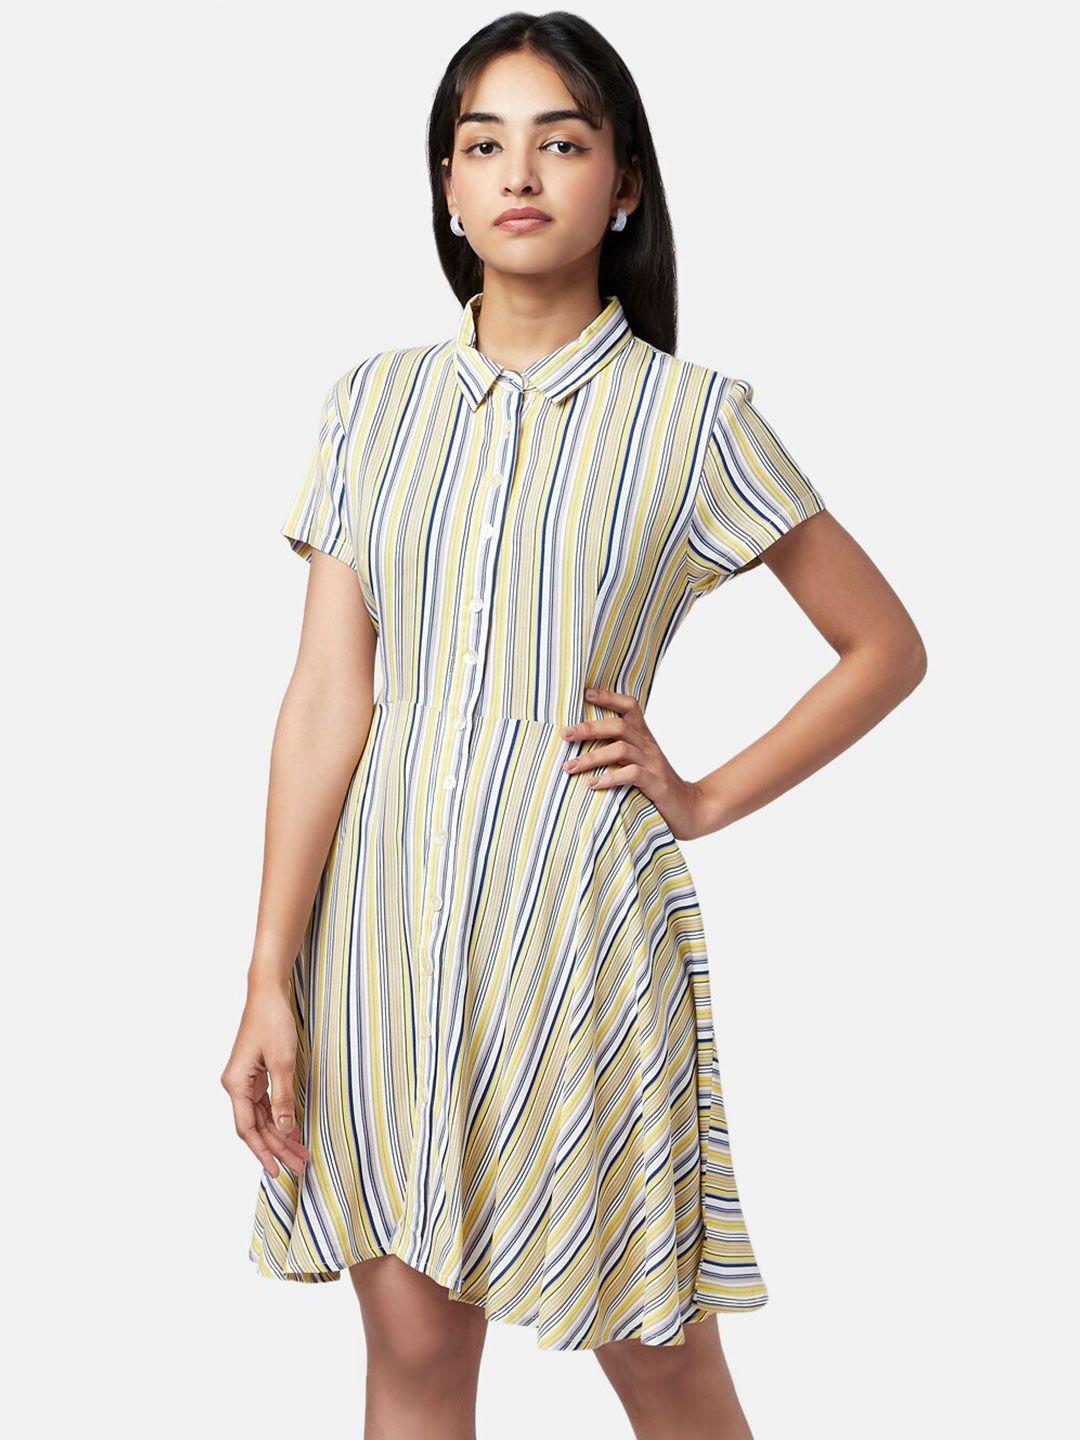 yu-by-pantaloons-yellow-&-blue-striped-shirt-dress